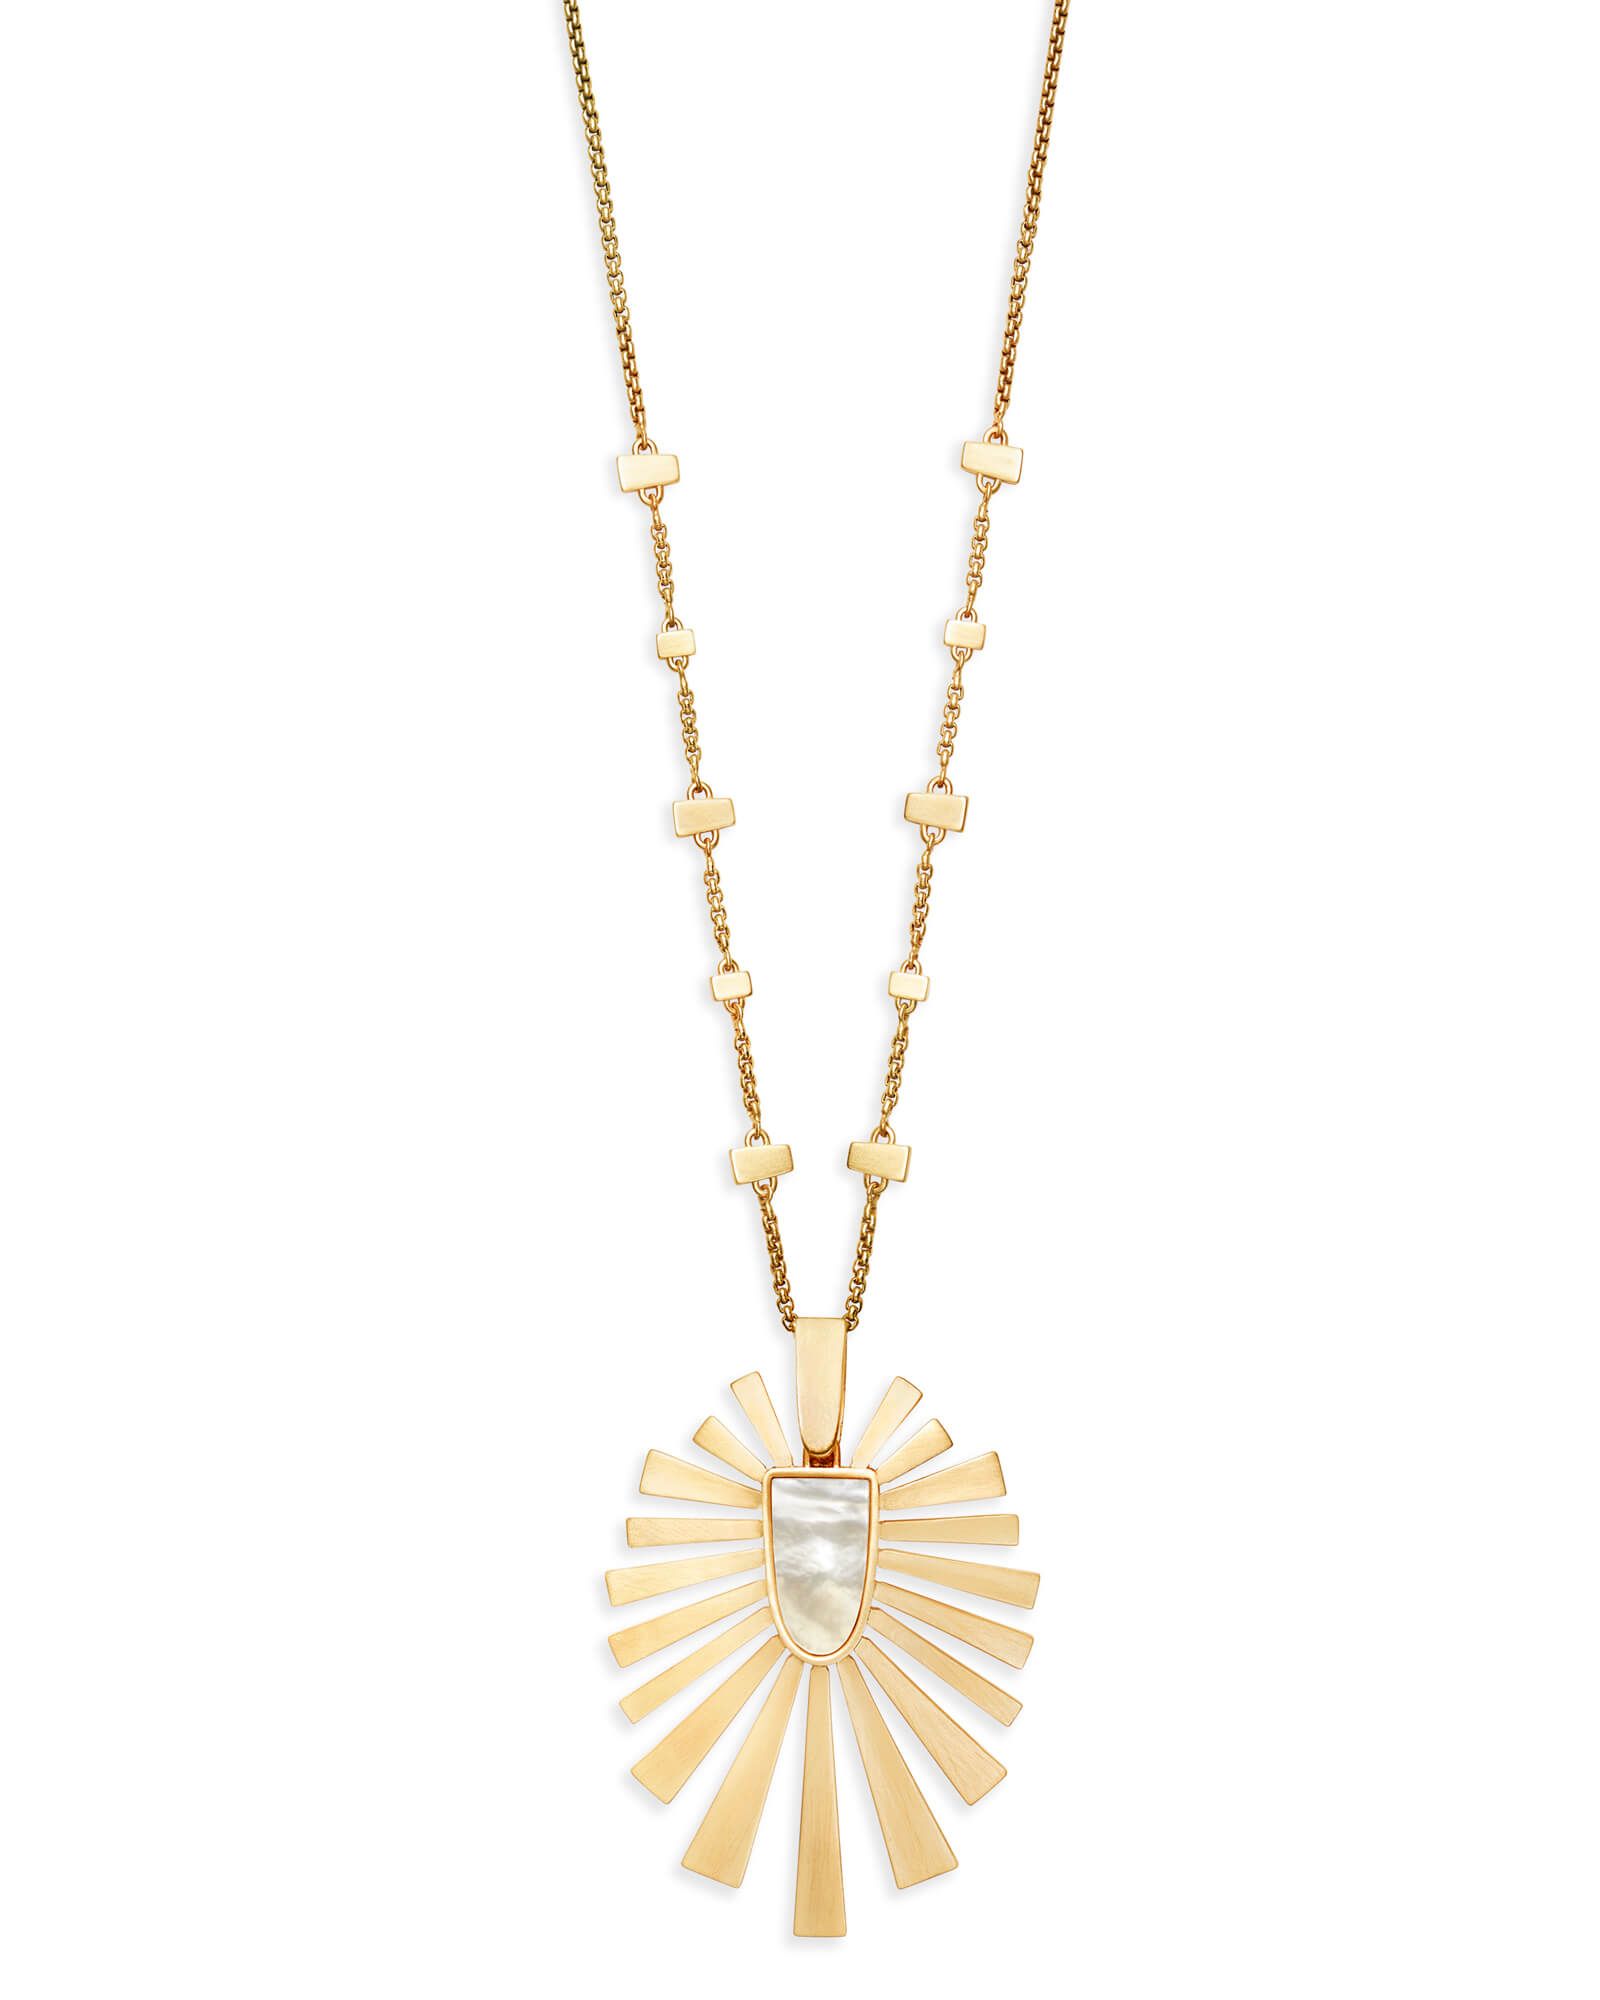 Paula Long Pendant Necklace in Gold | Kendra Scott